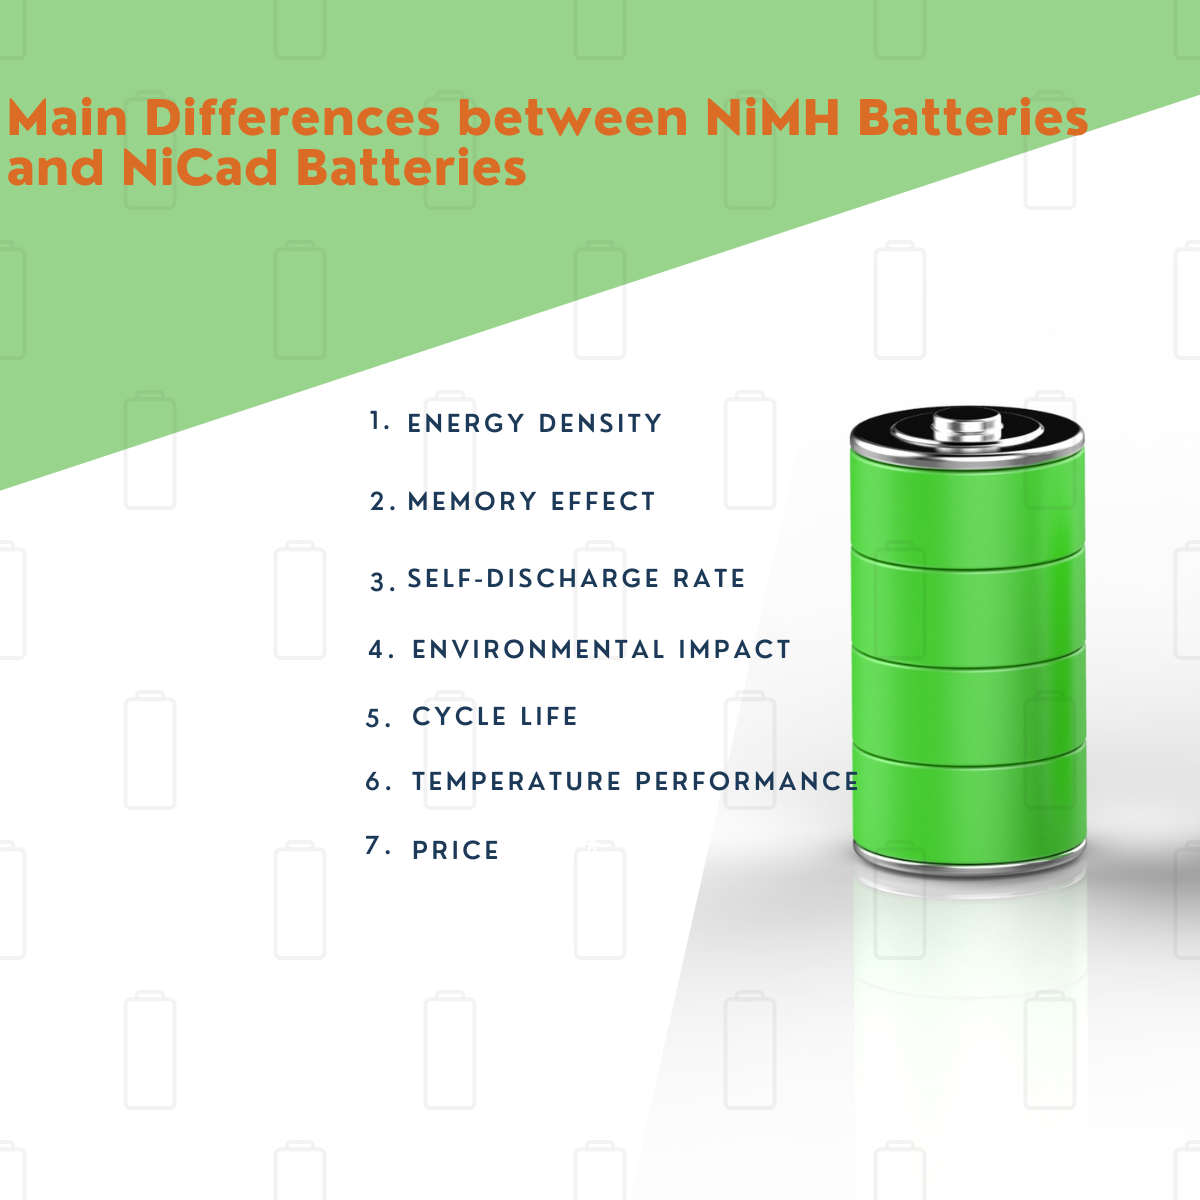 NiMH બેટરી અને NiCad બેટરી વચ્ચેનો મુખ્ય તફાવત